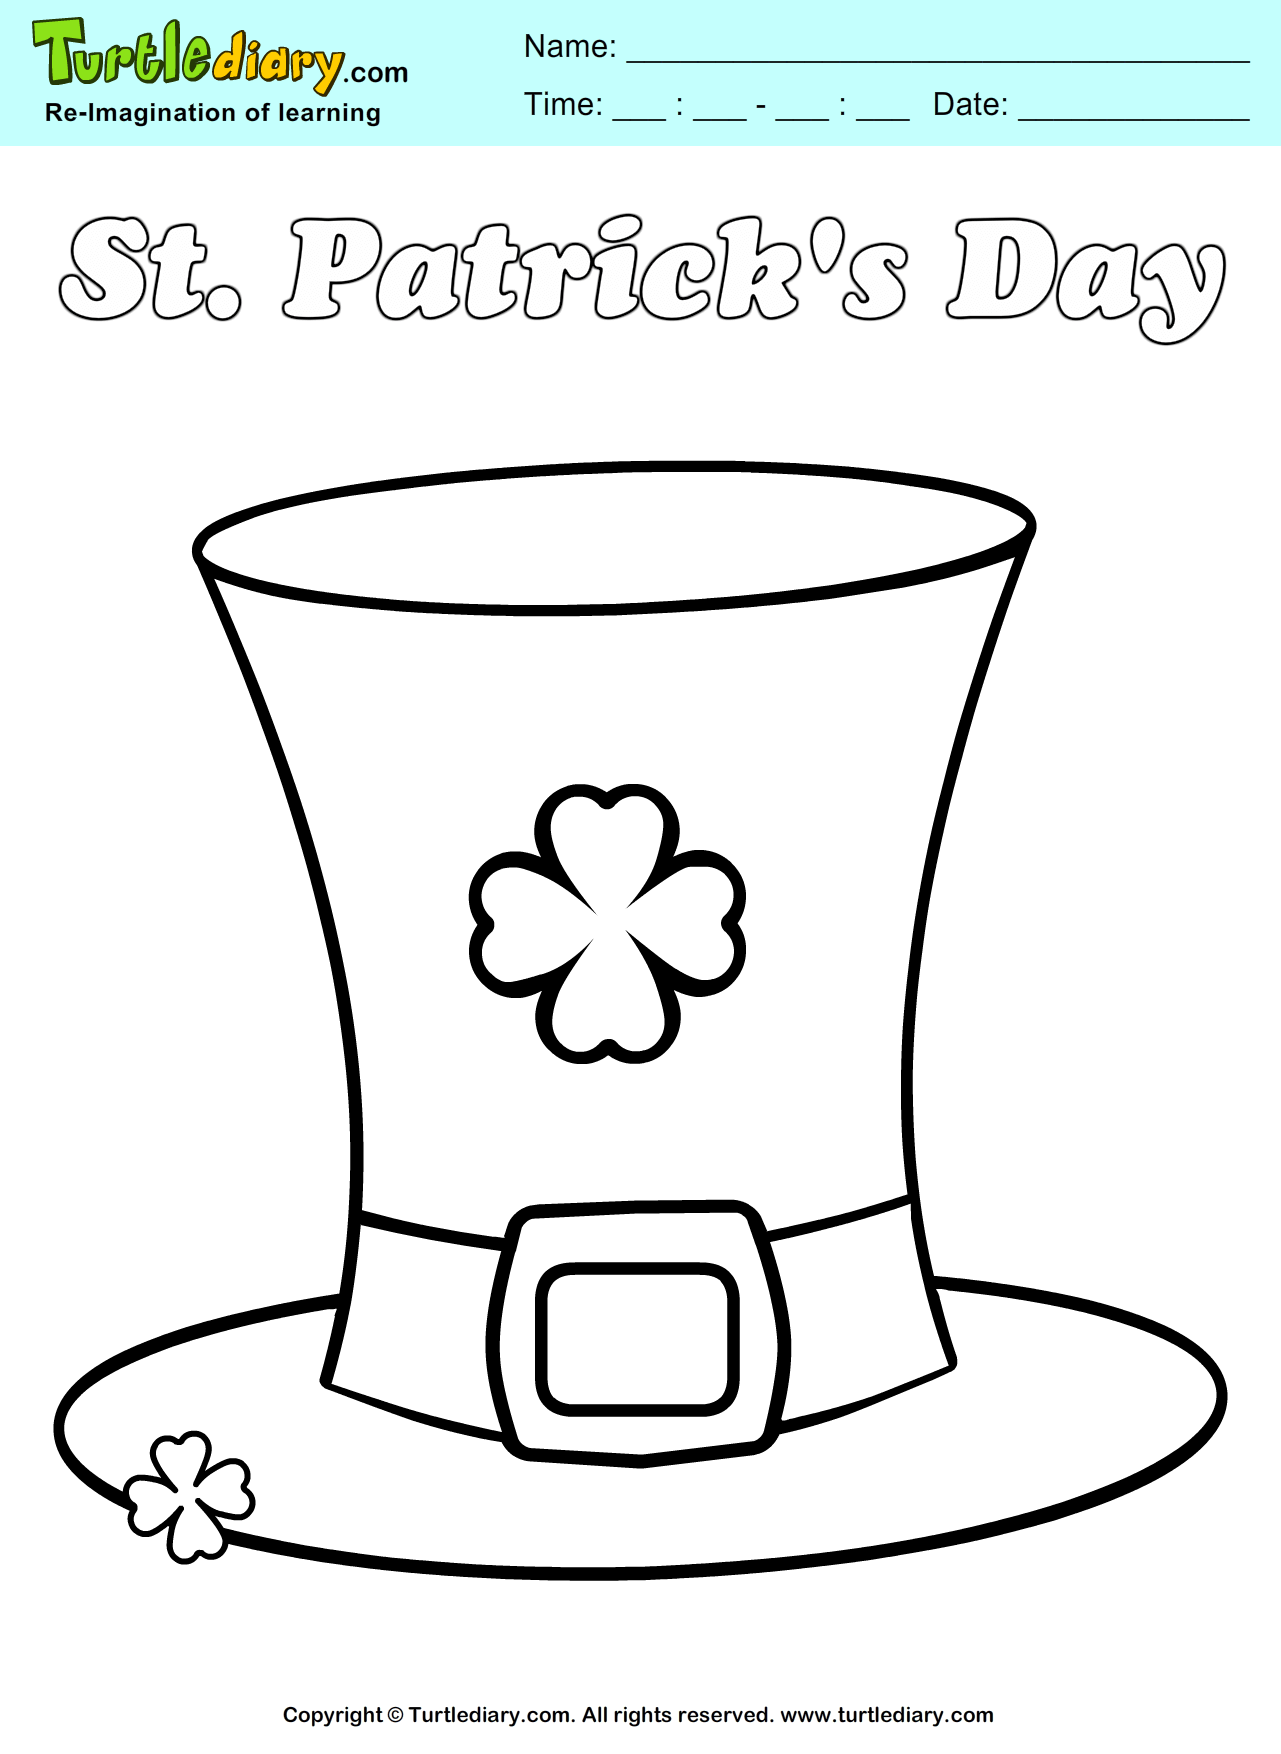 St patricks hat coloring sheet turtle diary